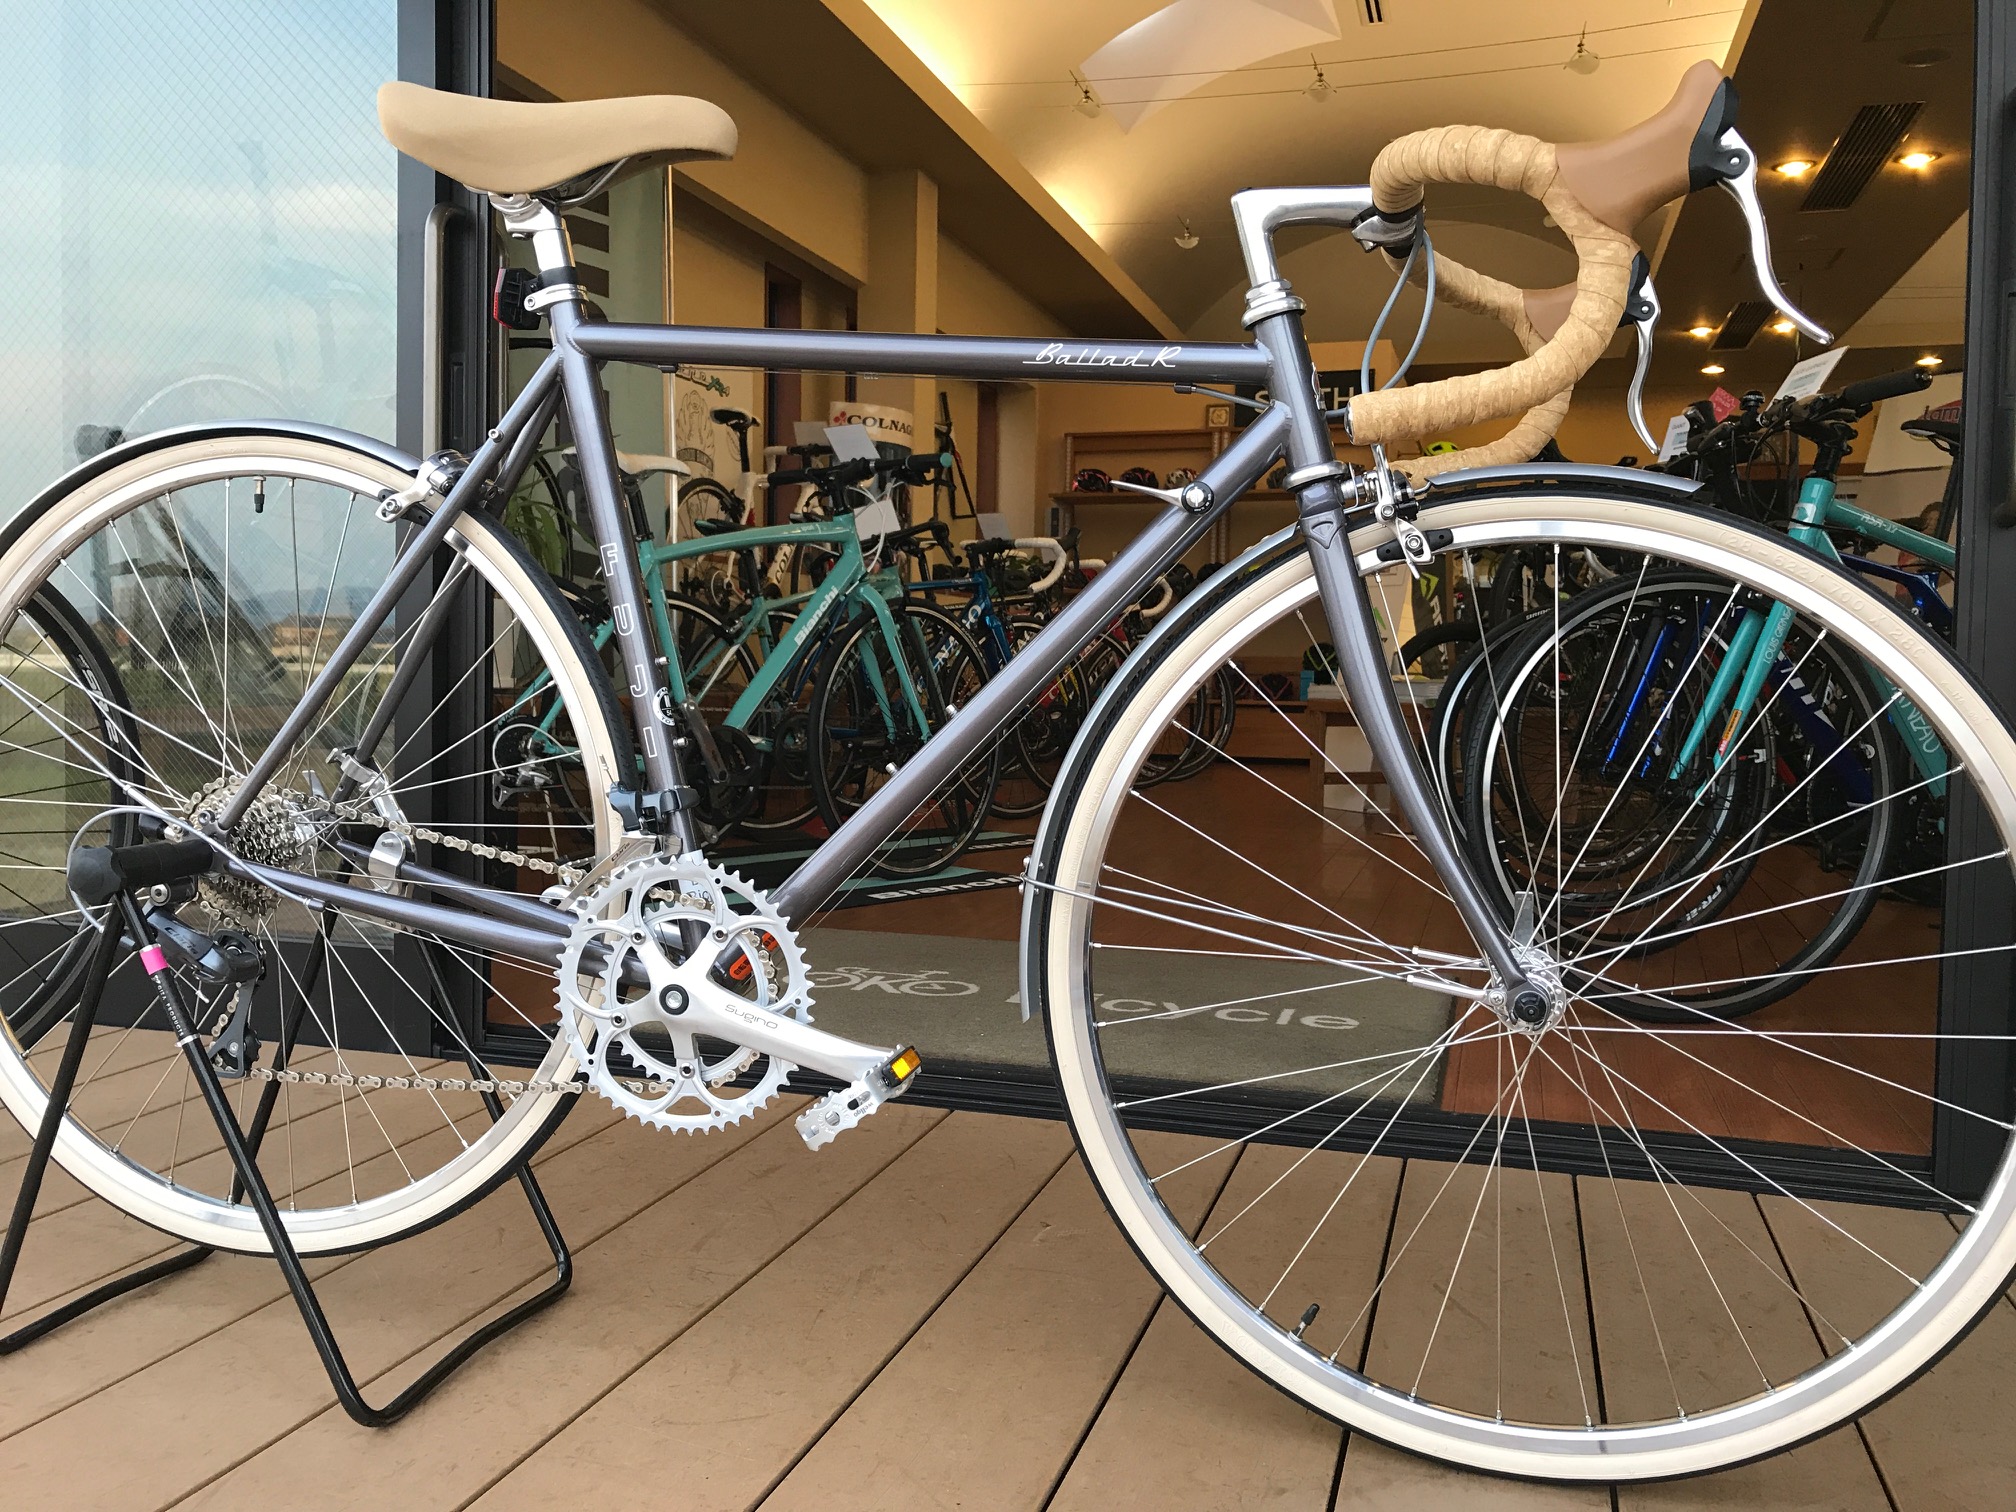 7/29 FUJI BALLAD R | LOKO Bicycle